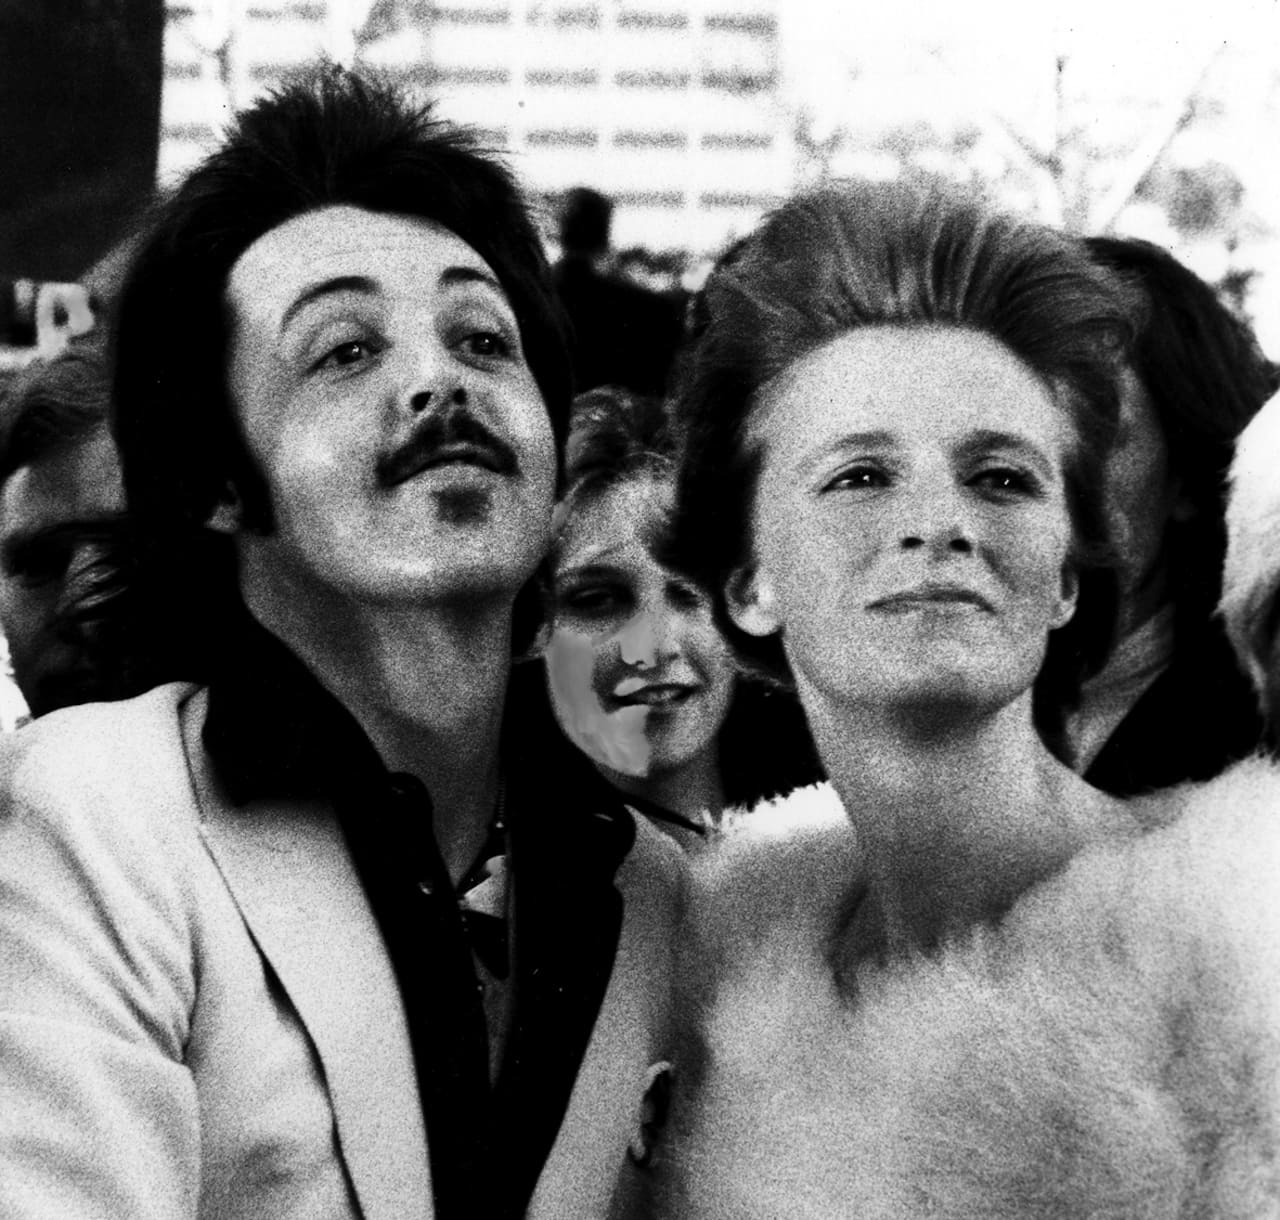 © Ron Galella, Ltd., 2022. Paul e Linda McCartney, 2 aprile 1974 - Los Angeles, California 46a edizione degli Academy Award